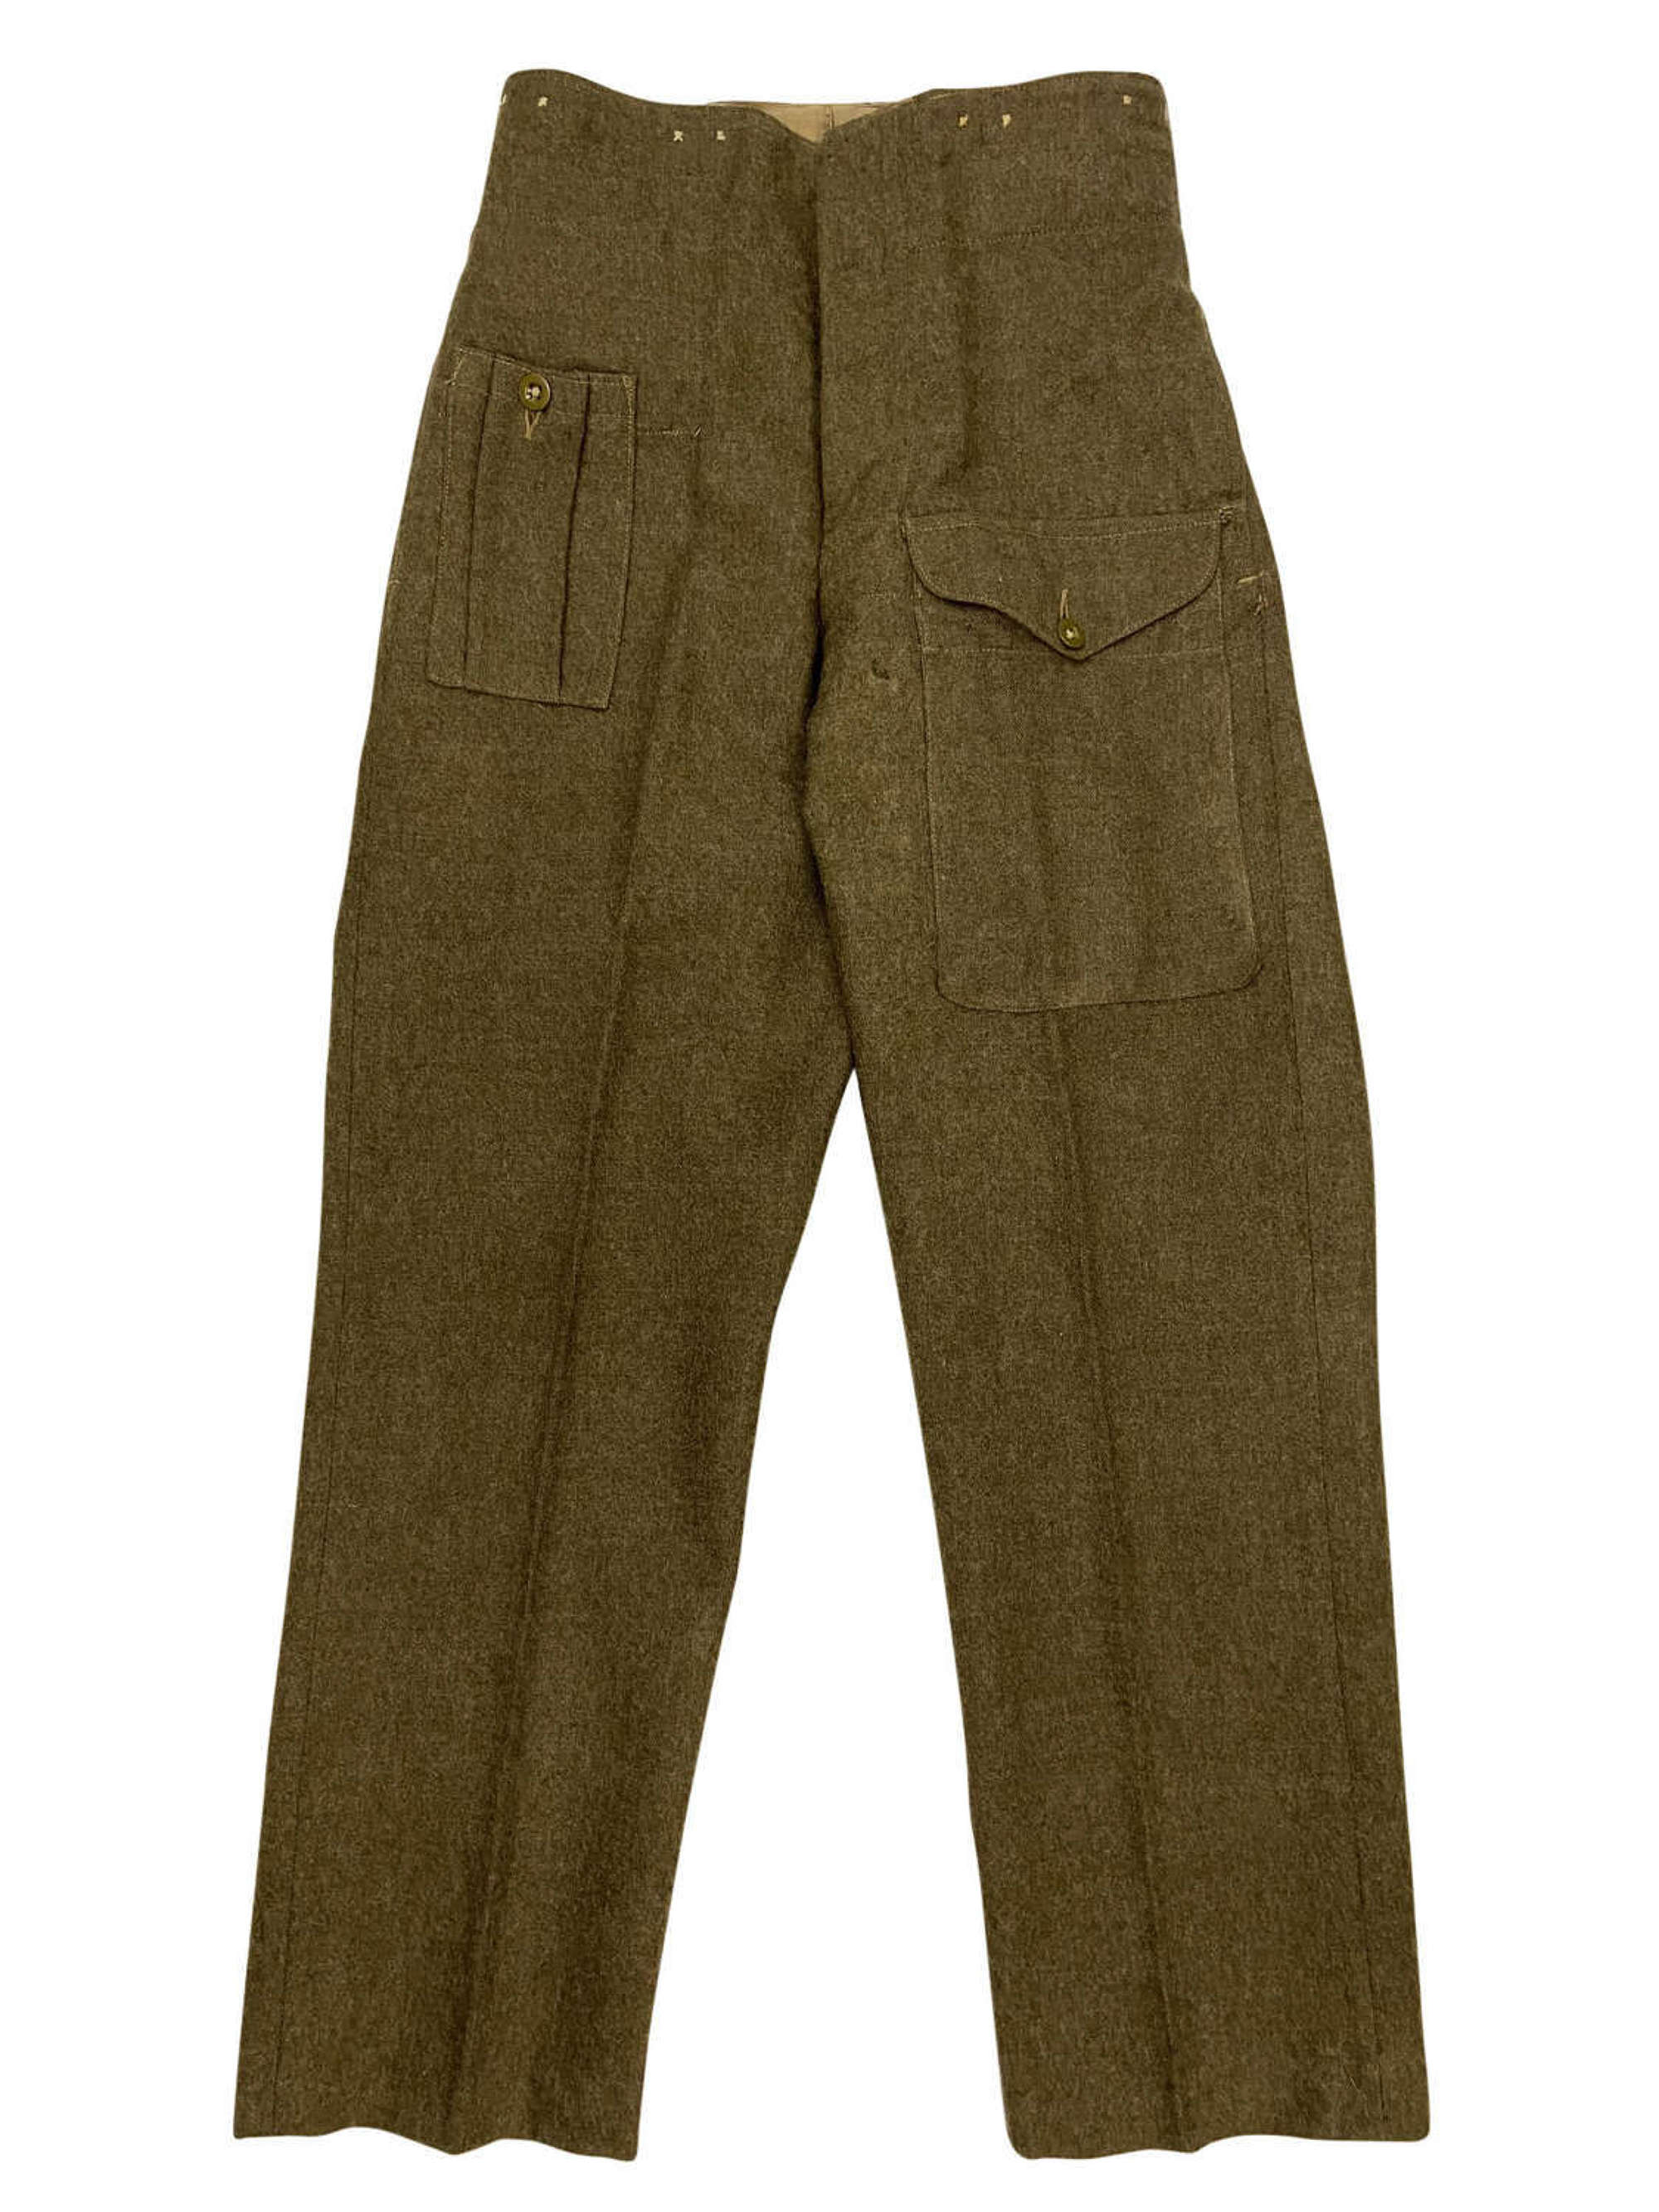 Original 1947 Dated 1946 Pattern British Army Battledress Trousers